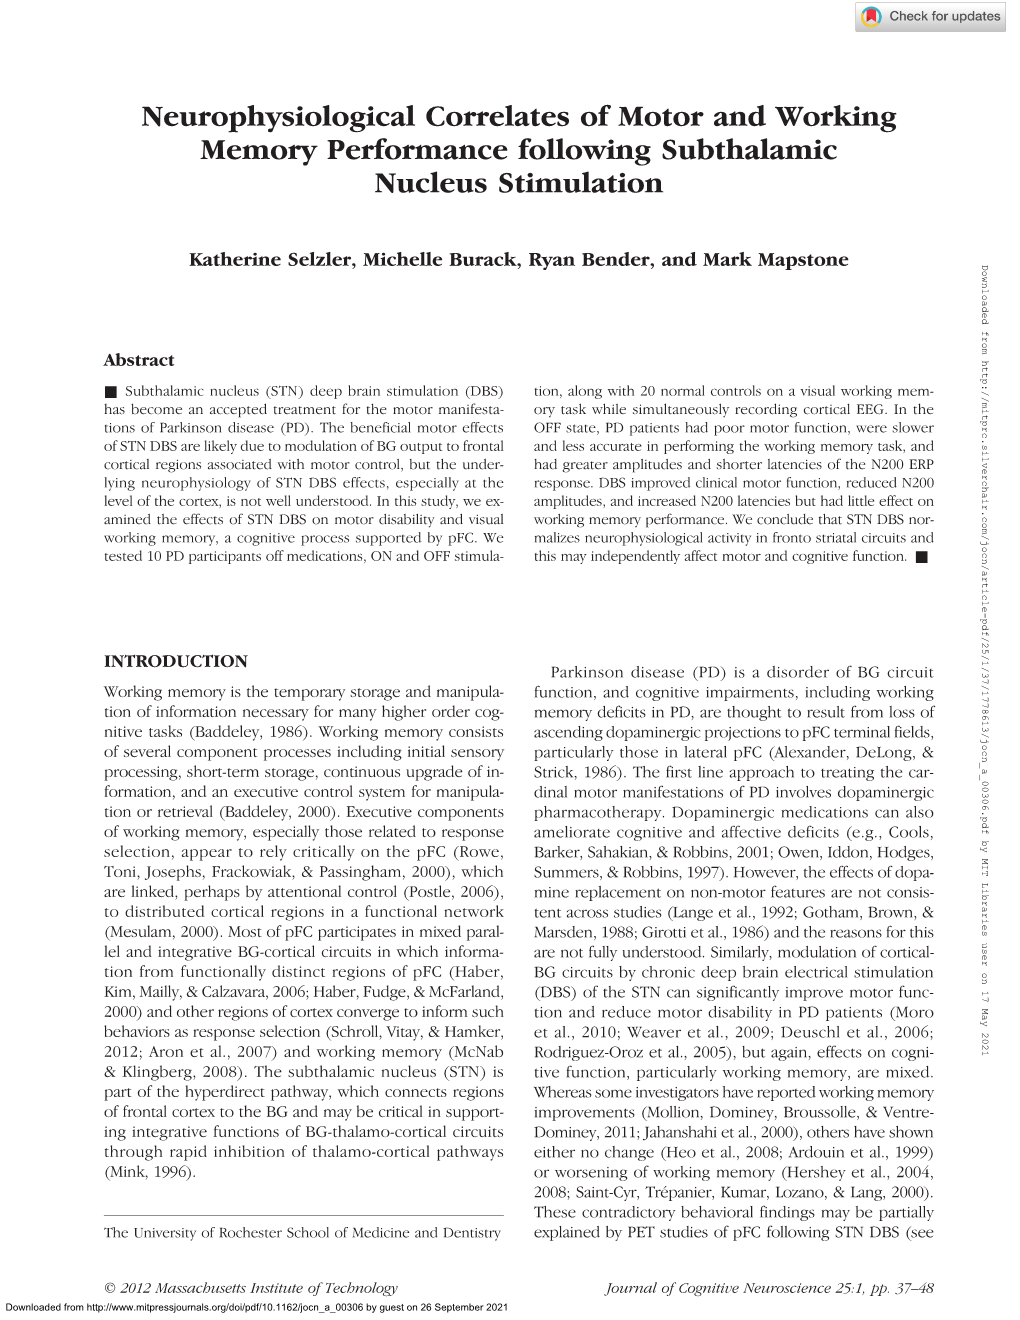 Neurophysiological Correlates of Motor and Working Memory Performance Following Subthalamic Nucleus Stimulation